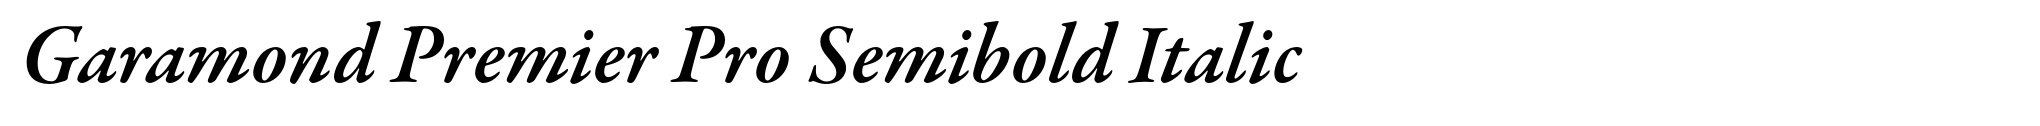 Garamond Premier Pro Semibold Italic image